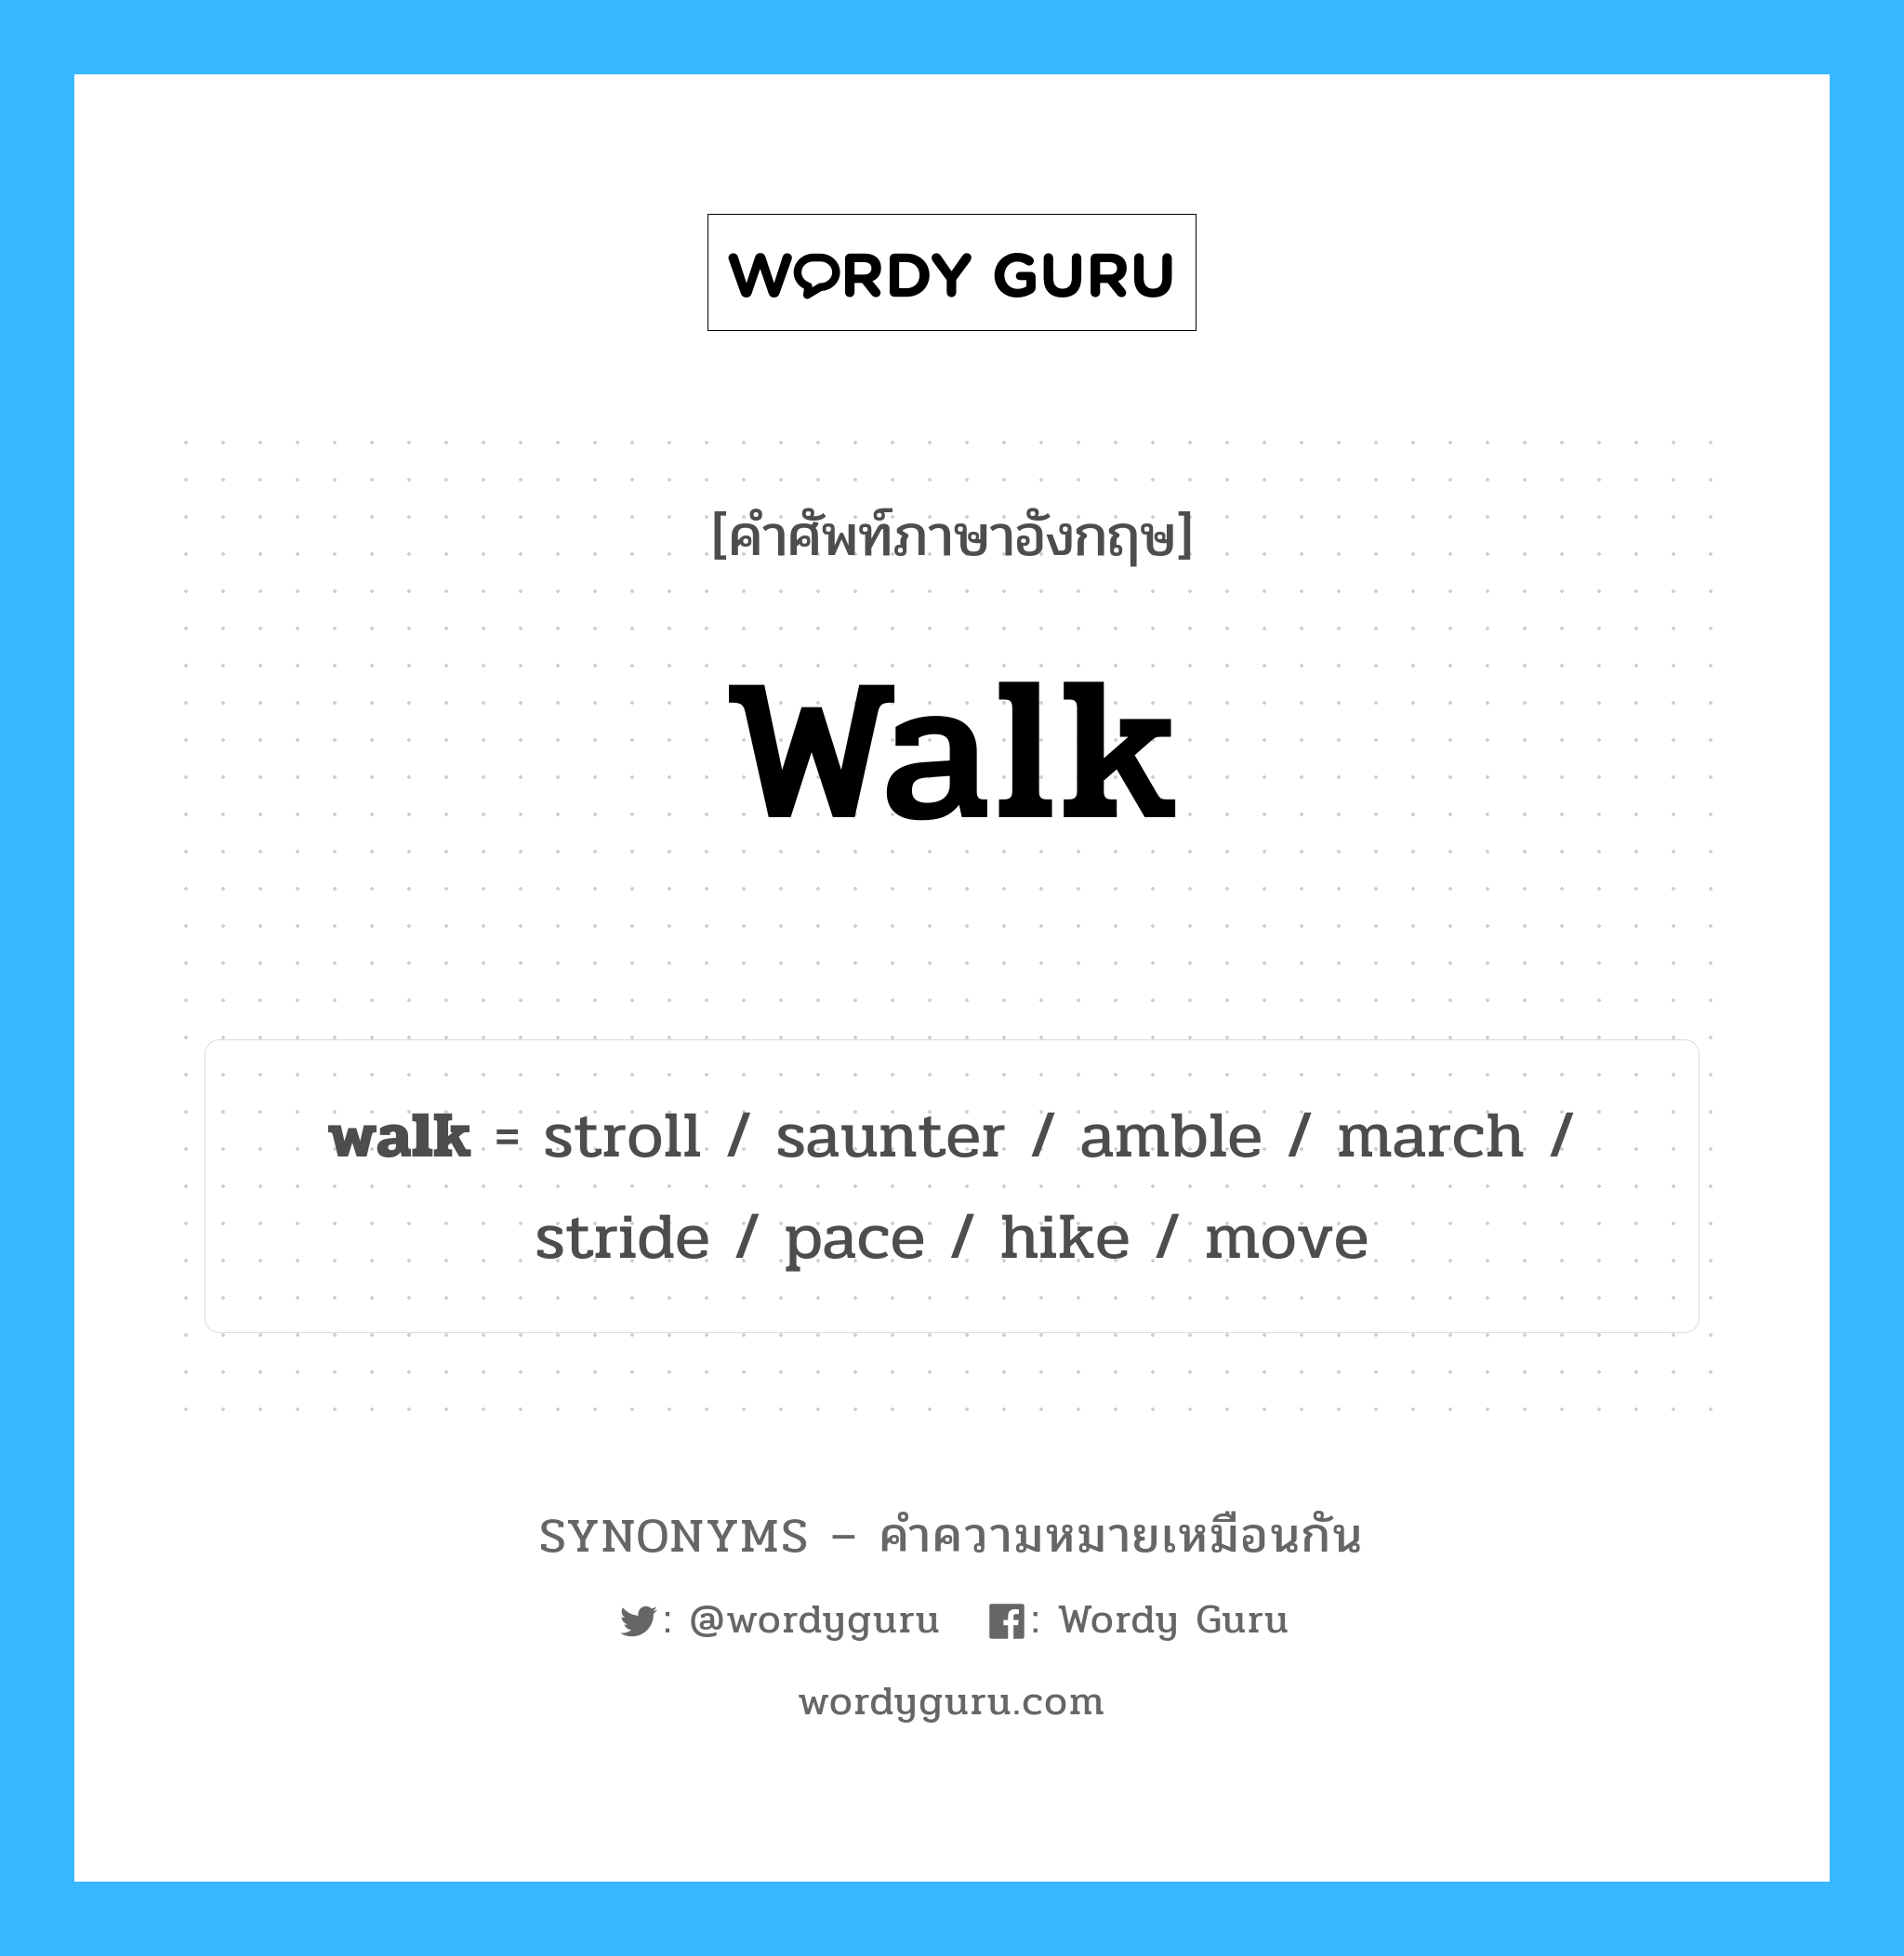 saunter เป็นหนึ่งใน walk และมีคำอื่น ๆ อีกดังนี้, คำศัพท์ภาษาอังกฤษ saunter ความหมายคล้ายกันกับ walk แปลว่า บลูสกายเกสท์ หมวด walk